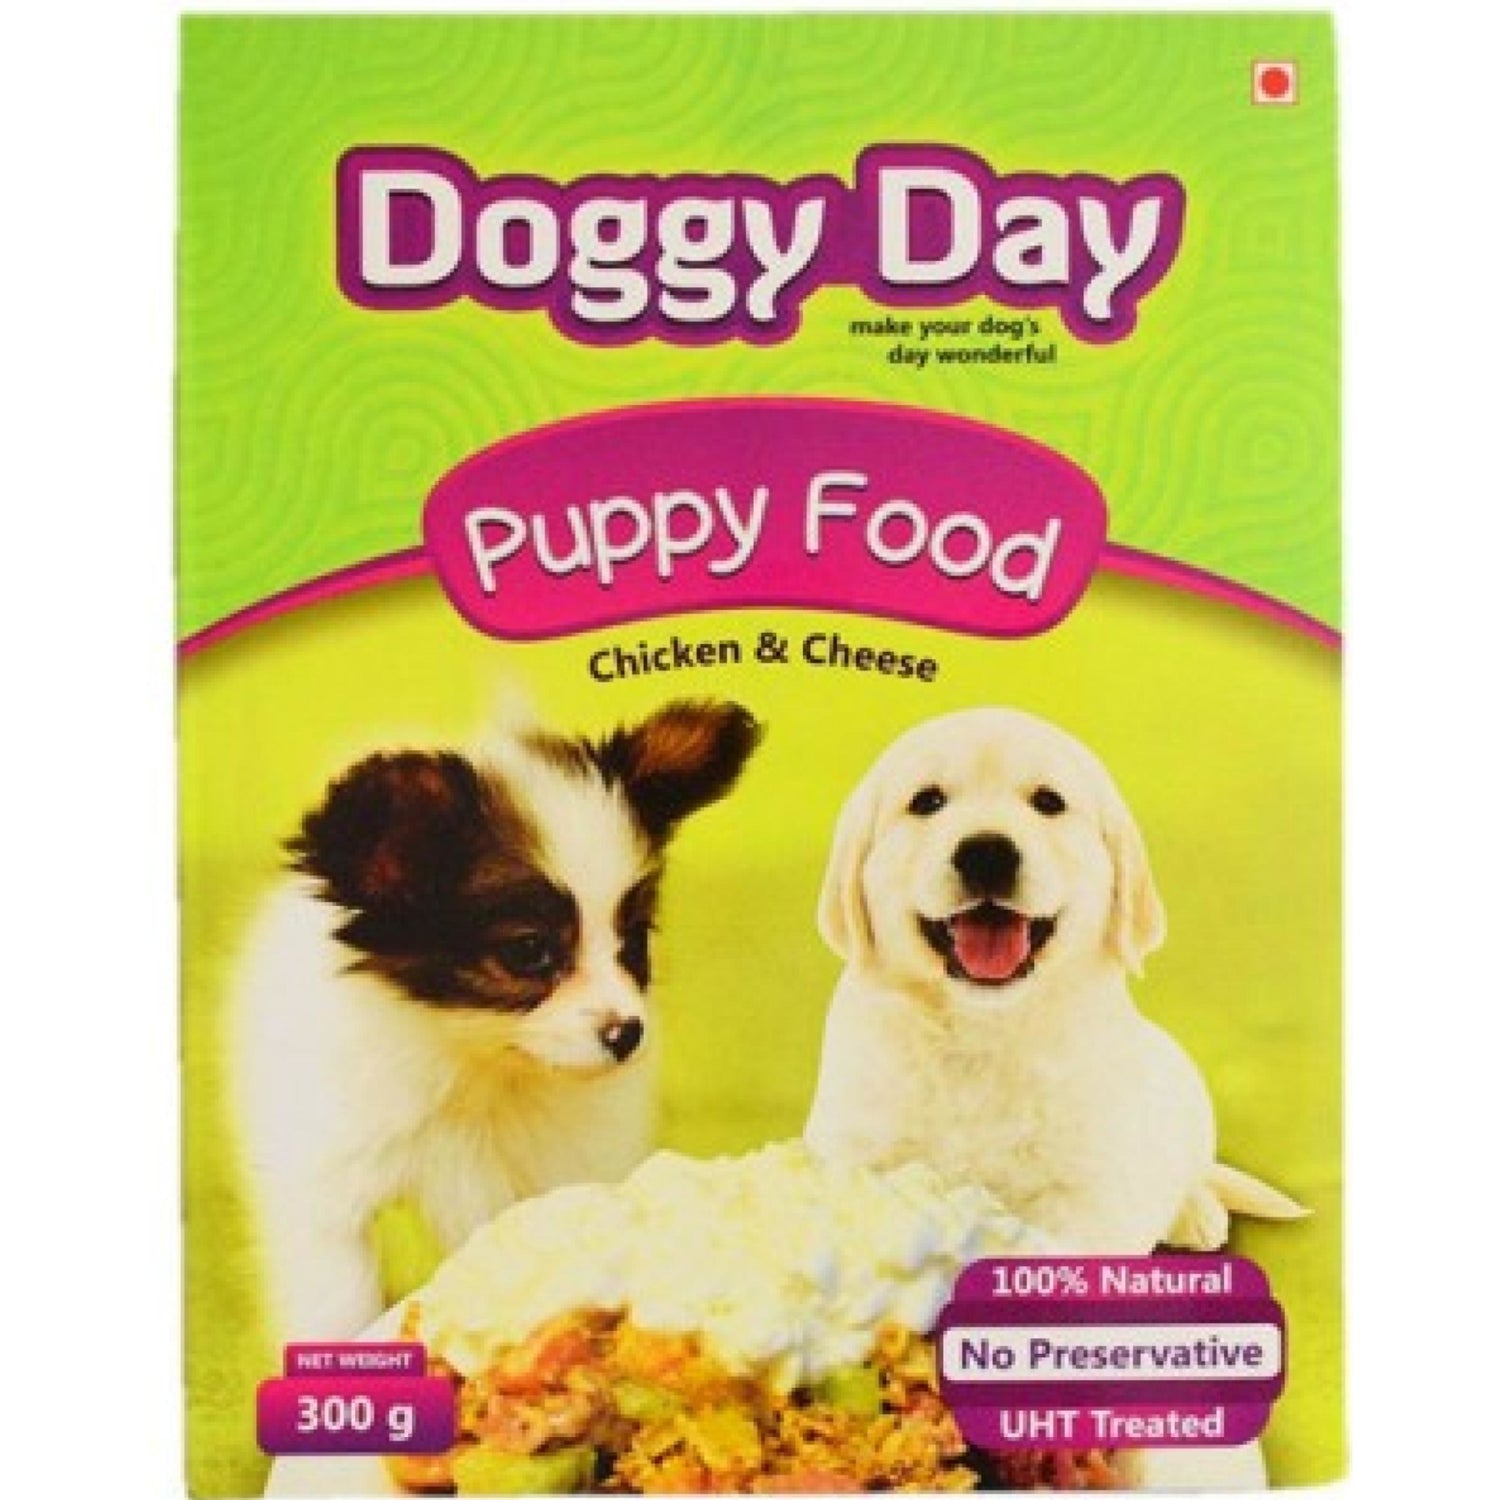 Doggy Day Puppy Food Chicken Cheese Gravy 100gm - 12packs